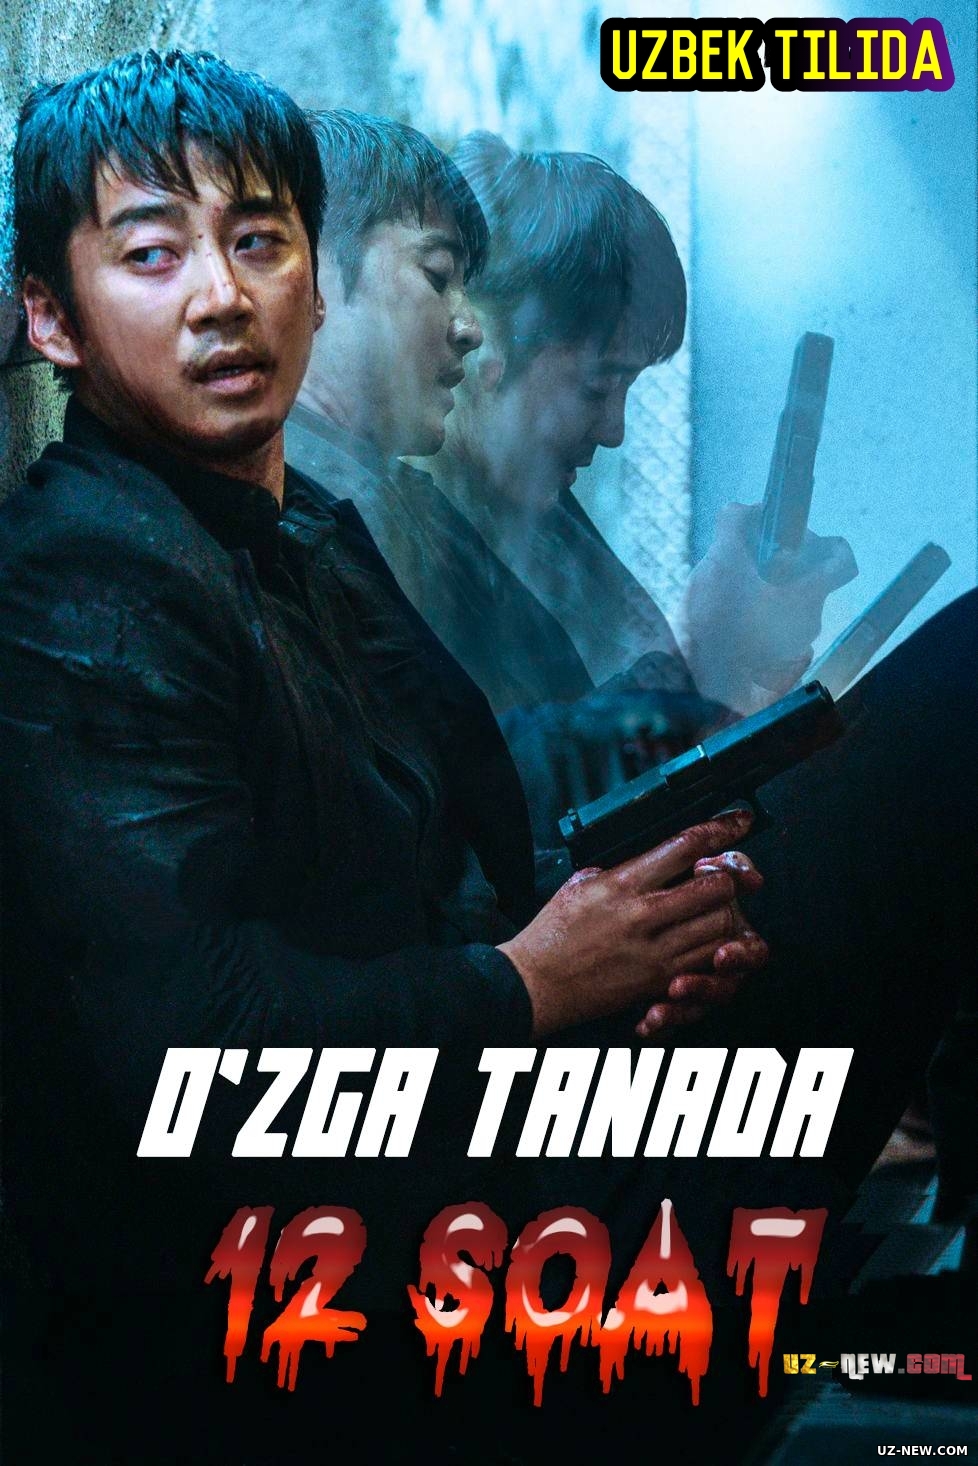 O'zga tanada 12 soat (Koreya filmi Uzbek tilida) 2021